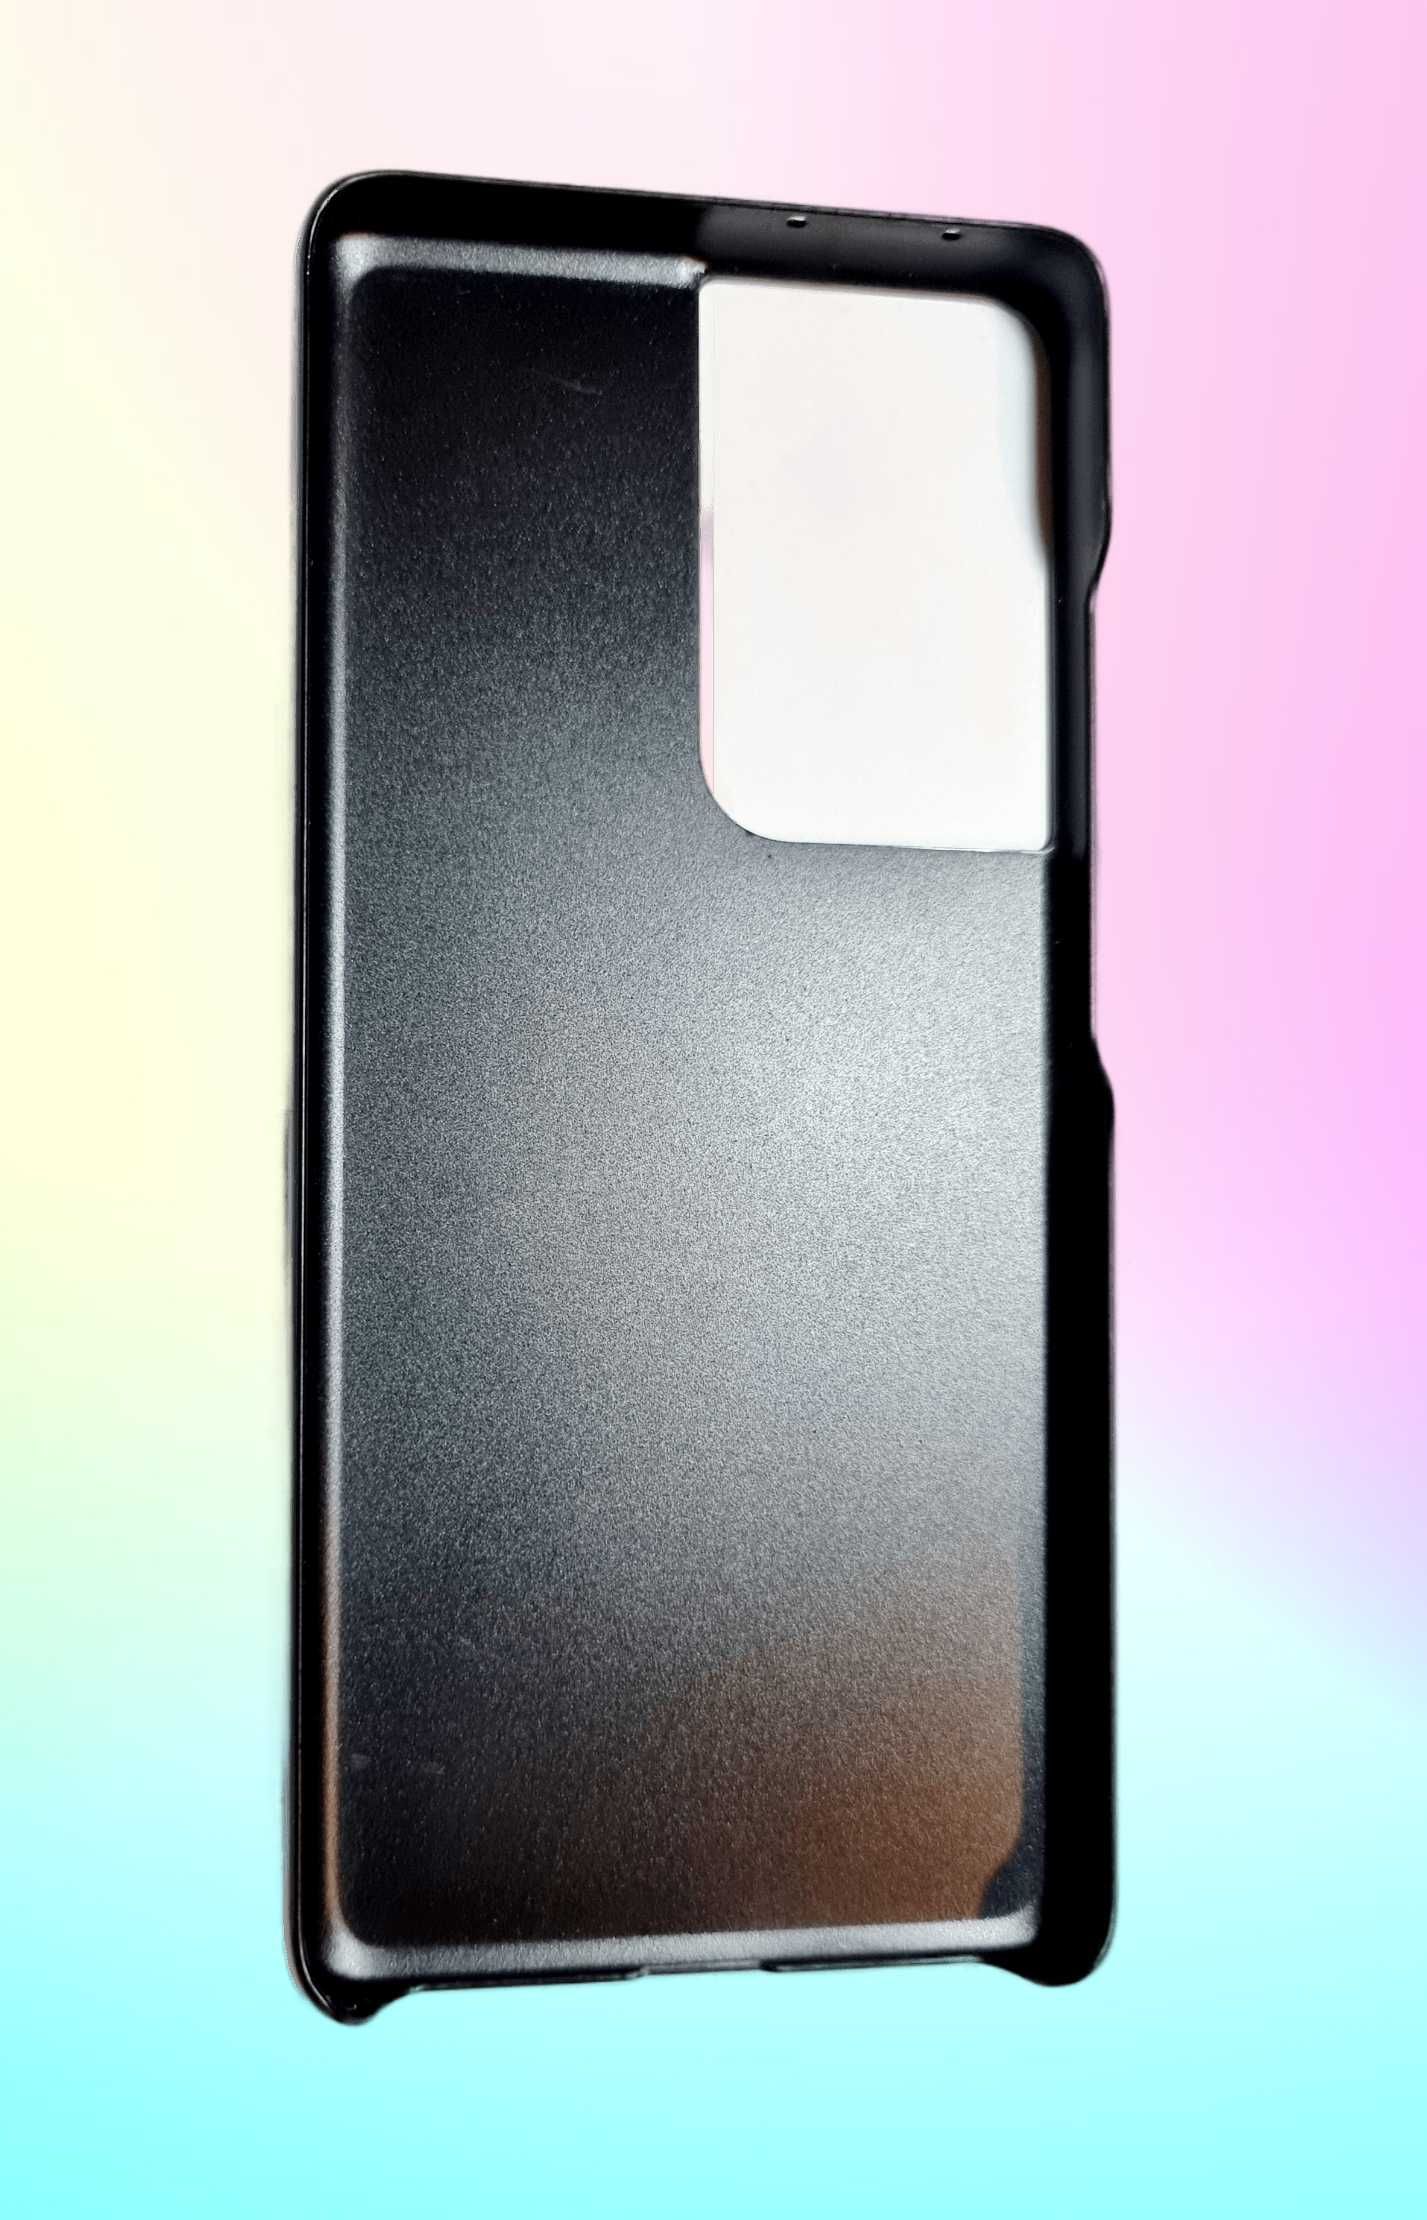 Husa pt. Samsung G. S21 ultra gri, A21s gri, antisoc, original